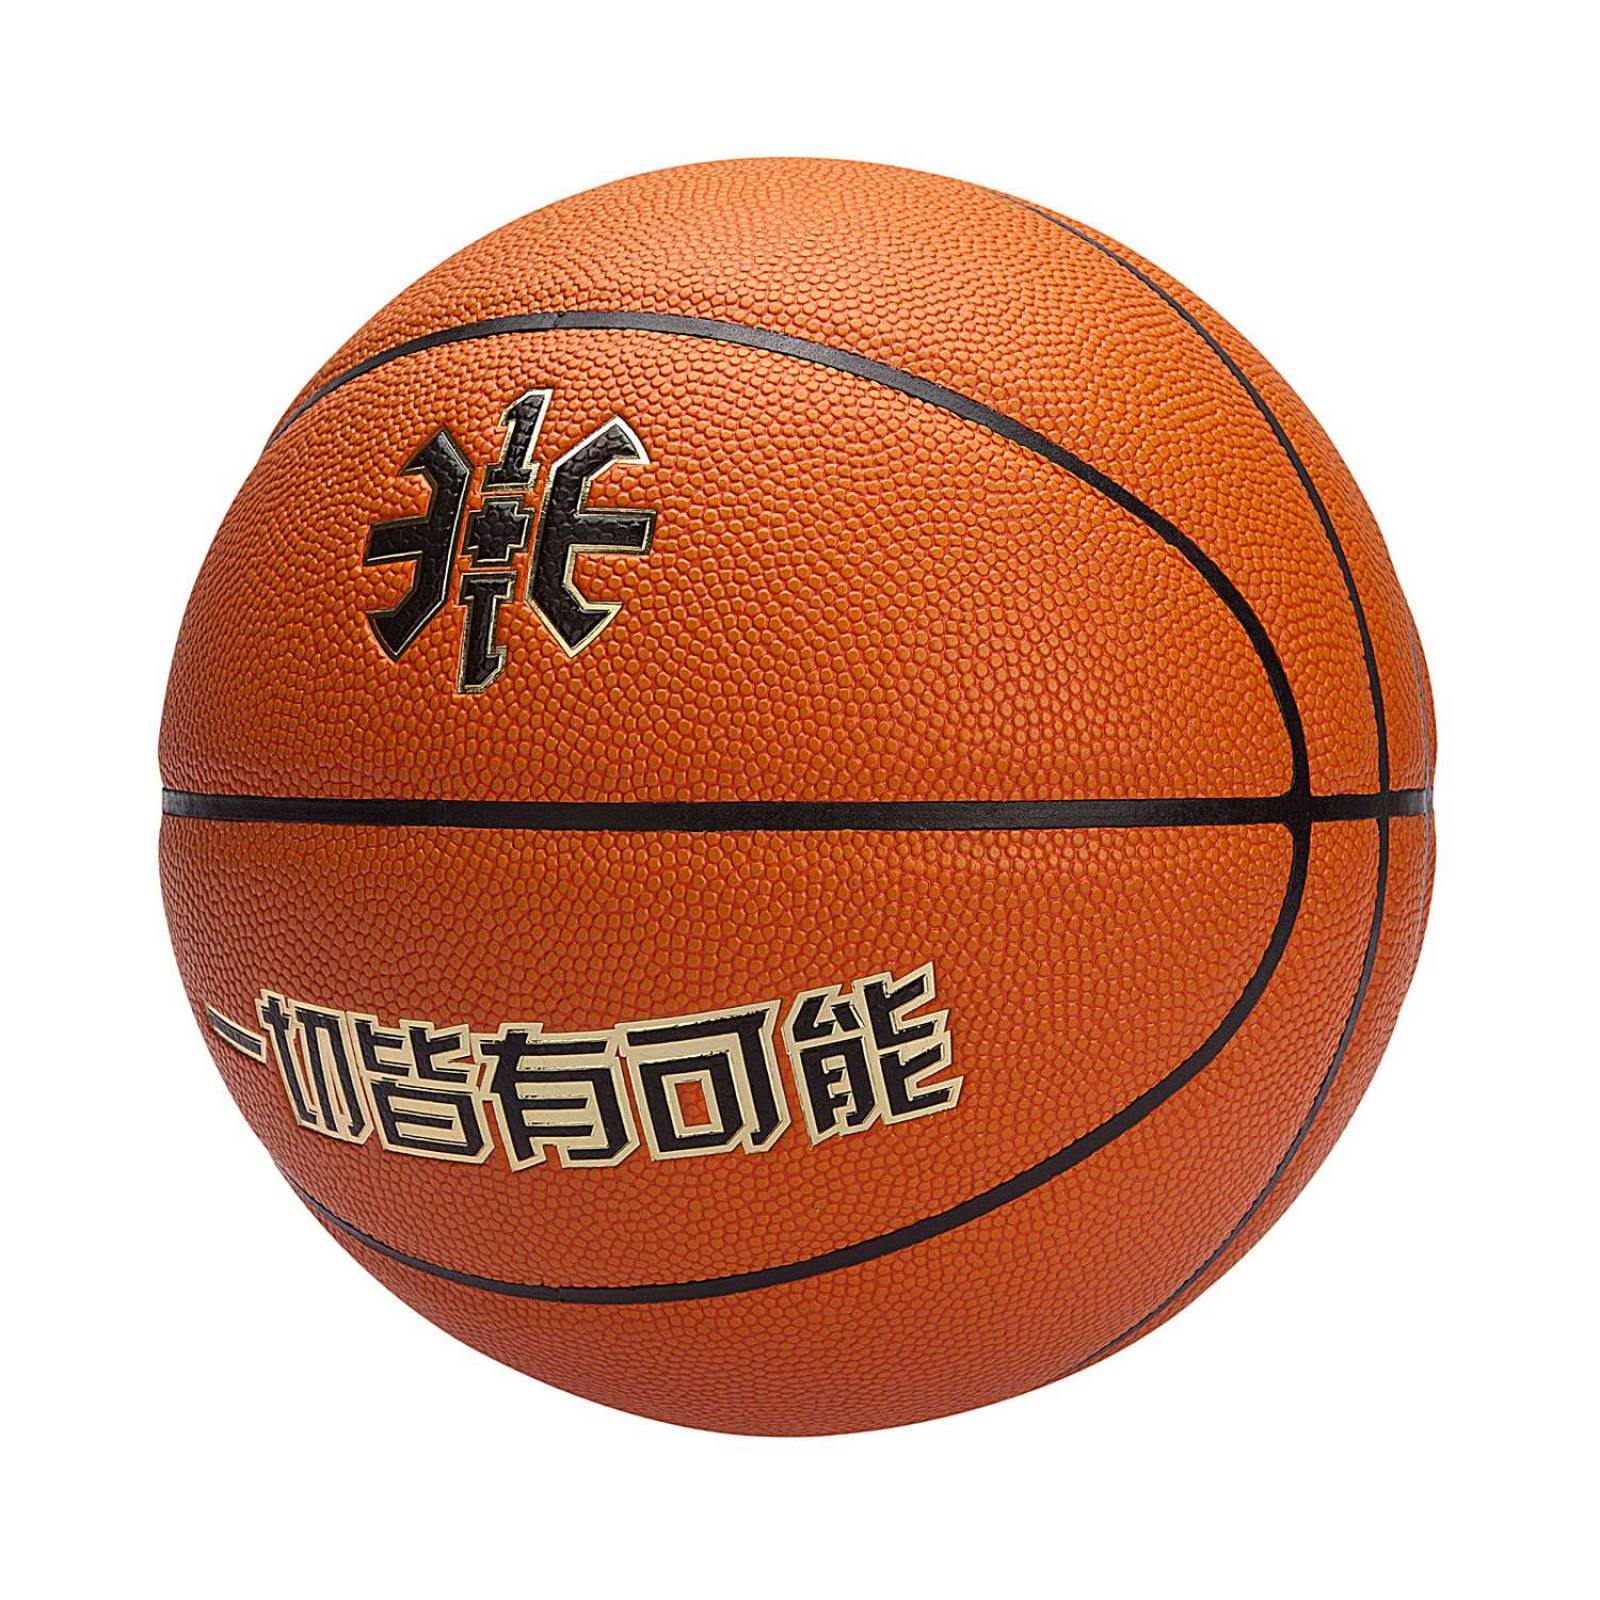 Balon de Basketball Li-Ning ABQN054-1 color Naranja Unisex